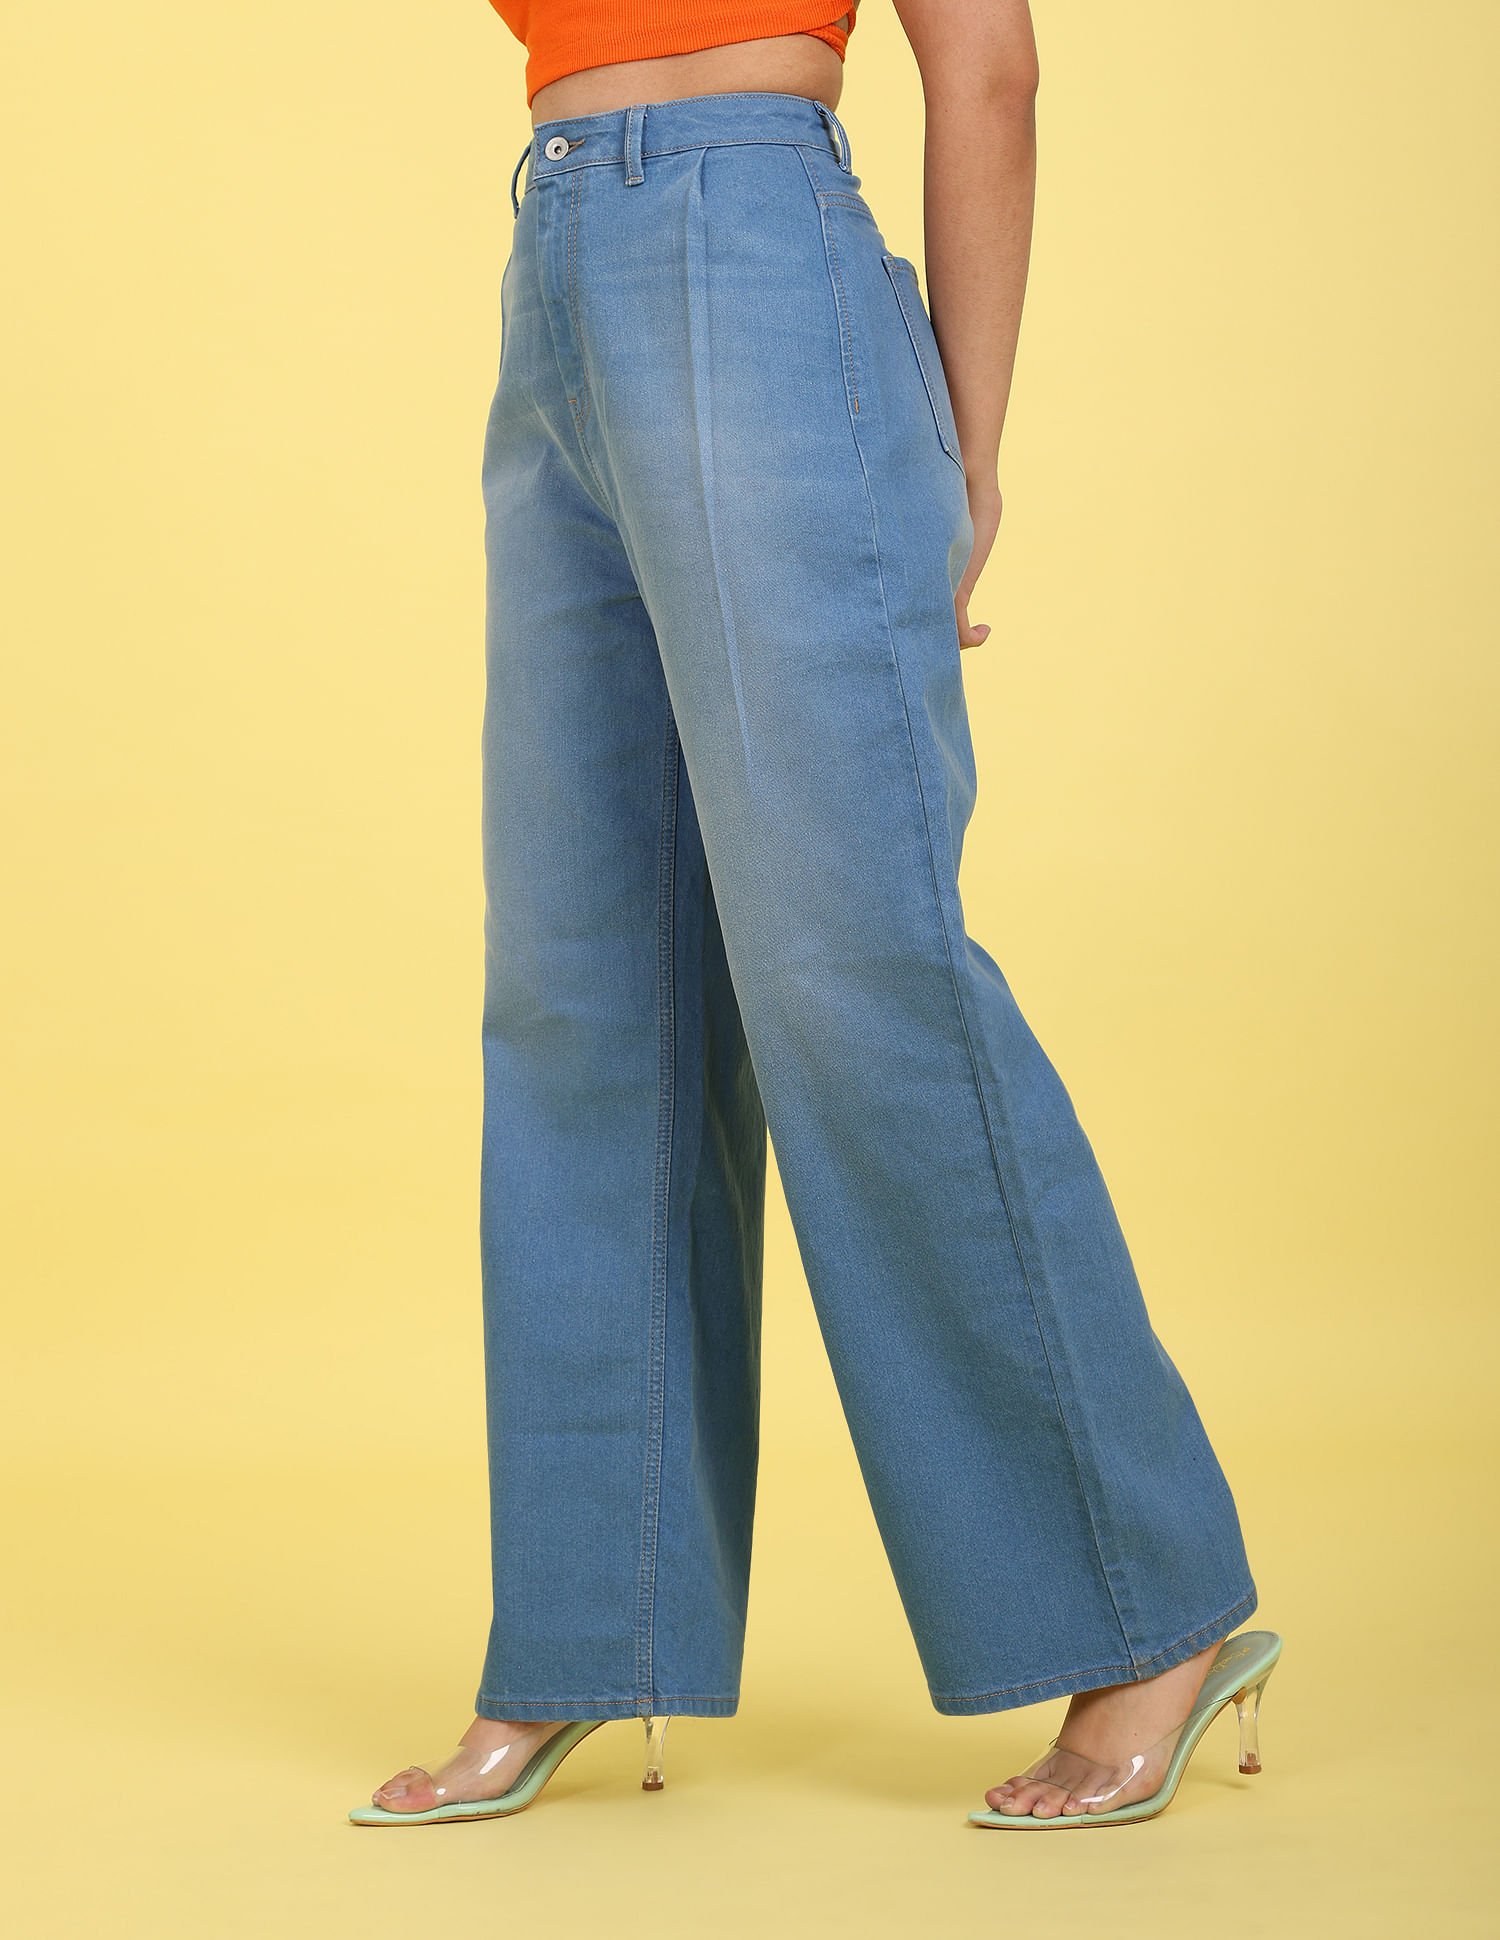 Men Vintage Patchwork Bell Bottom Jeans Classic Retro Disco Flared Leg Denim  Pants 60s 70s Wide Leg Jean Trousers (Light Blue,Small) at Amazon Men's  Clothing store